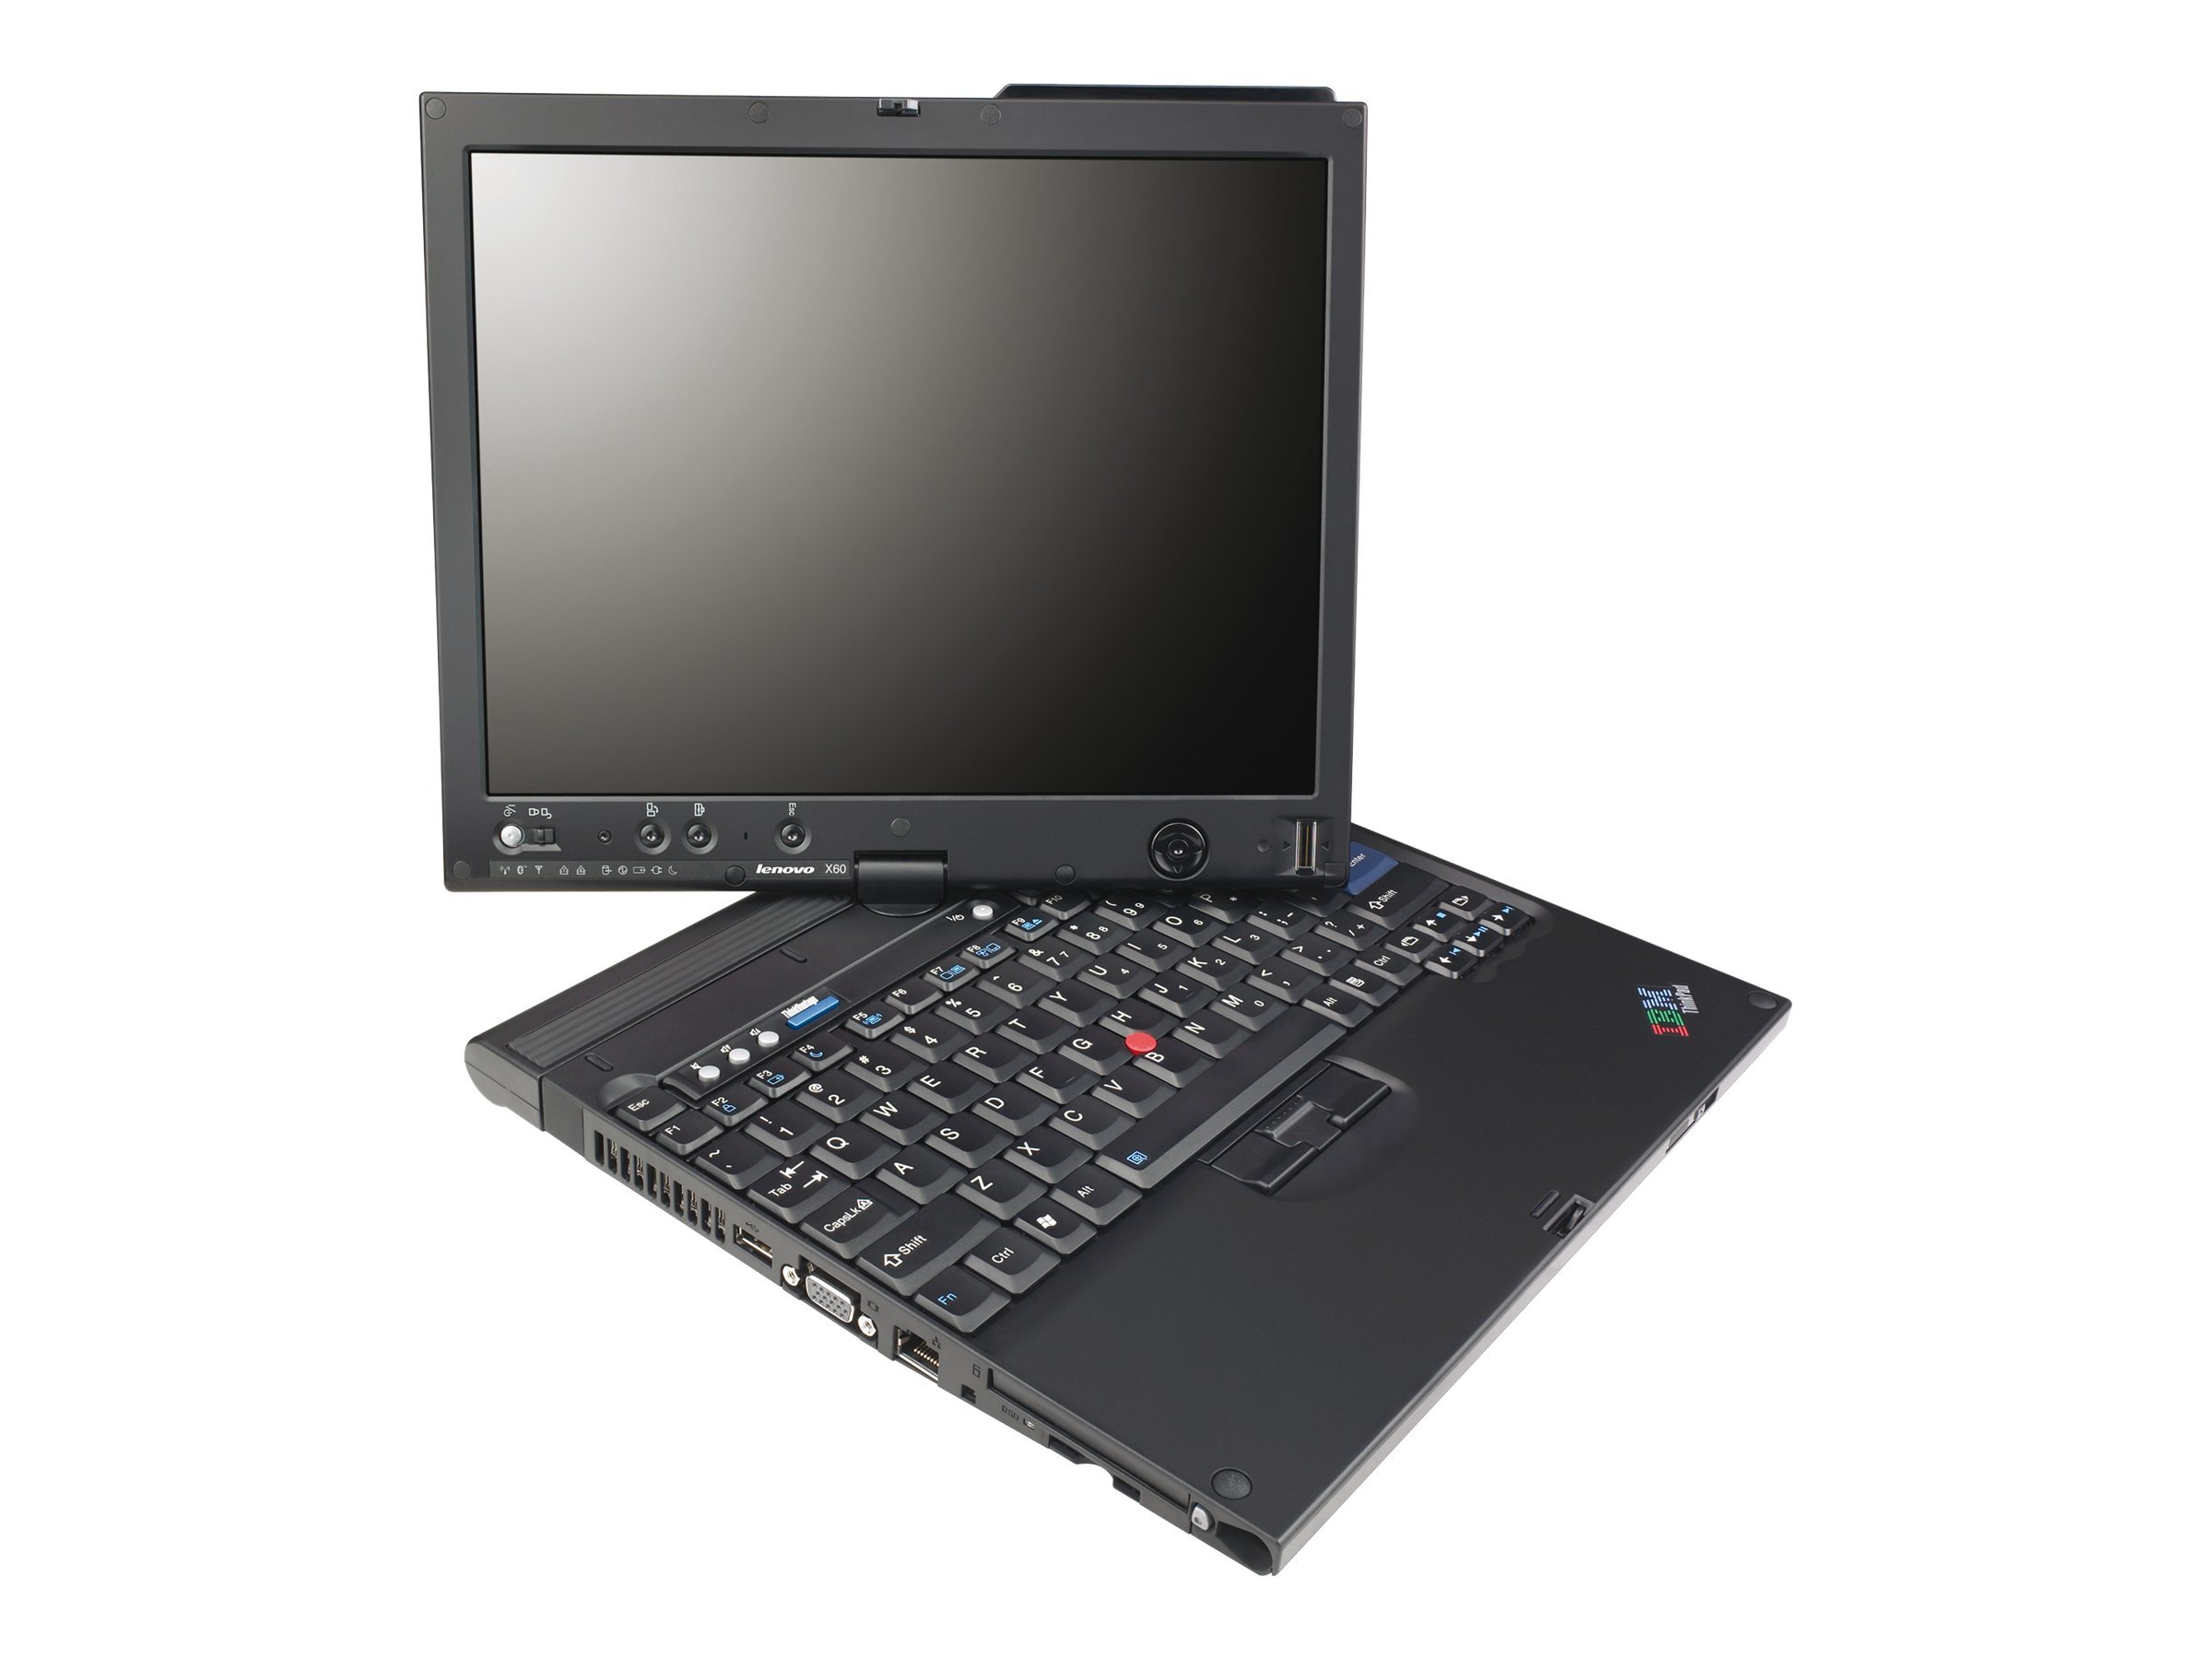 Lenovo ThinkPad X60 Tablet (6366)